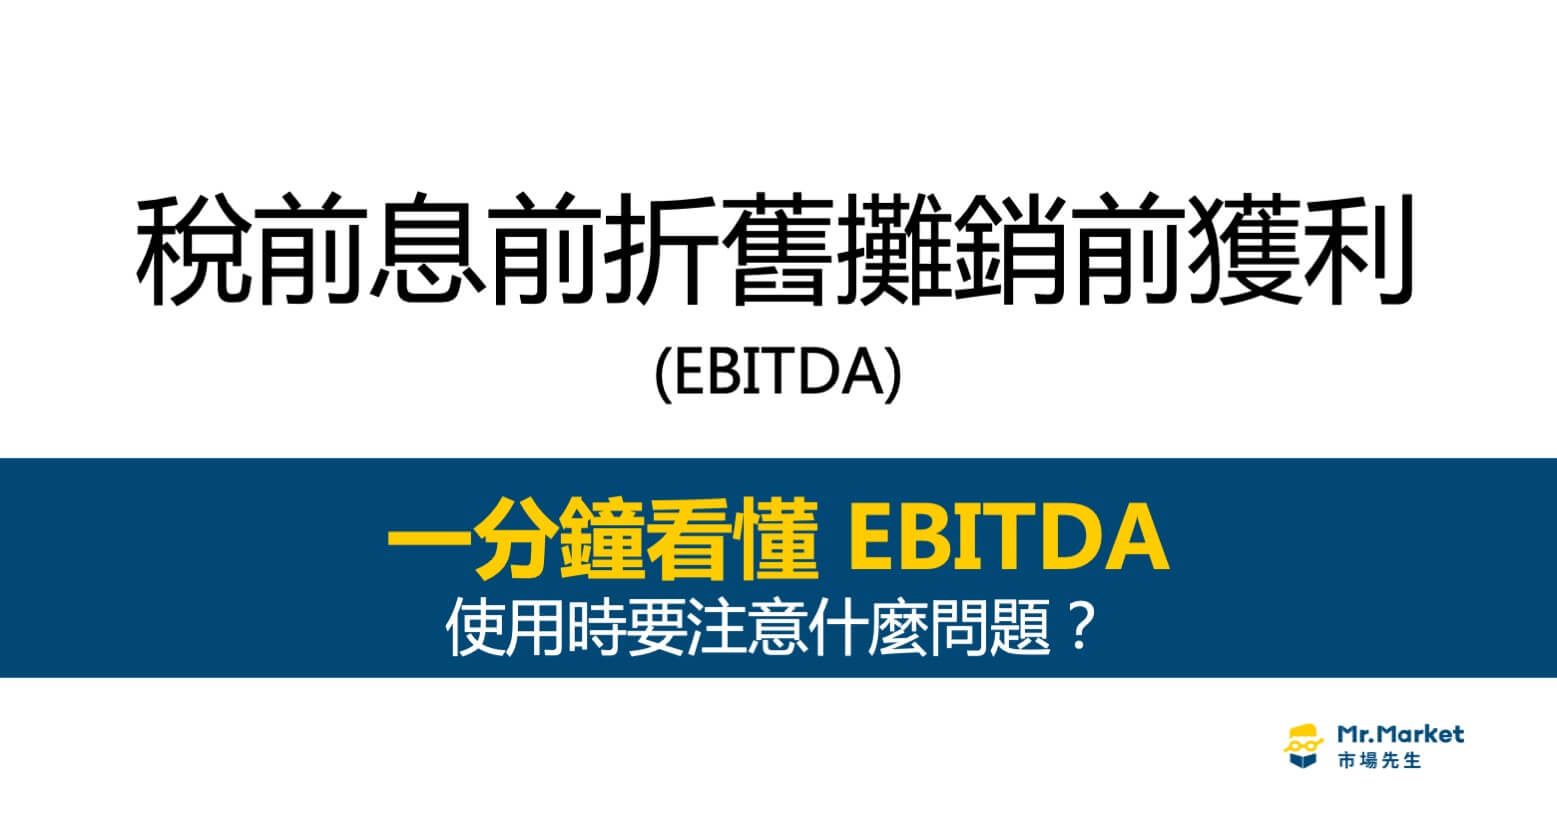 ebitda是什麼